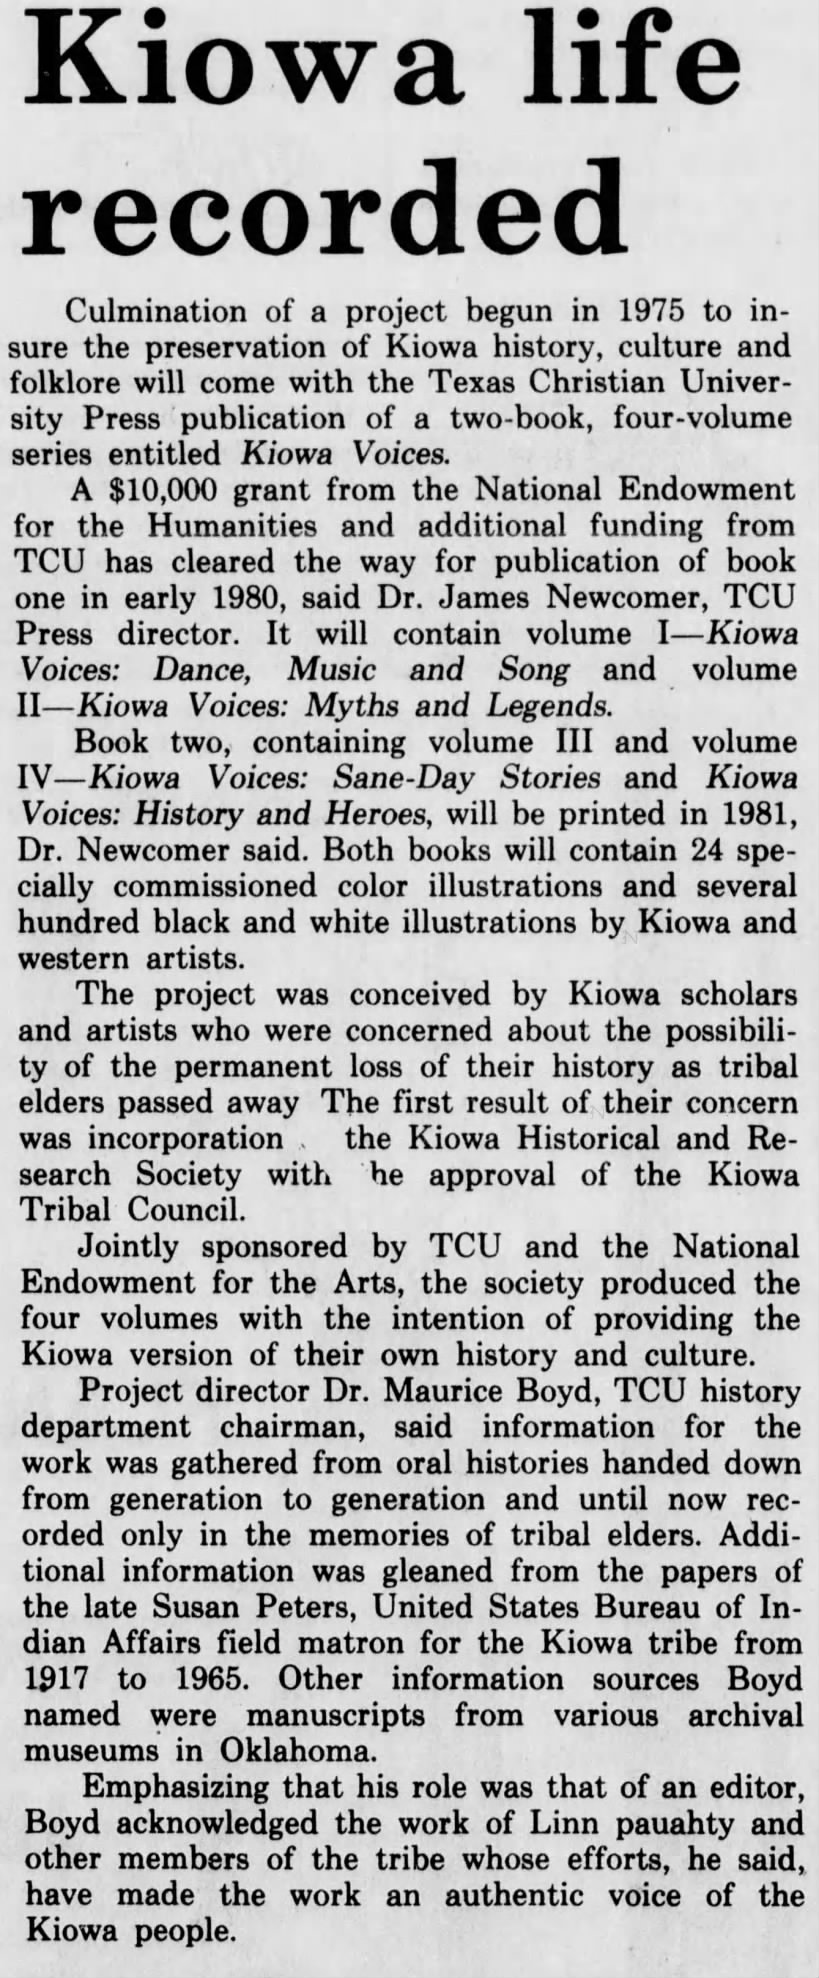 Kiowa life recorded. Irving Daily News (Irving, Texas) November 7, 1979, p 10